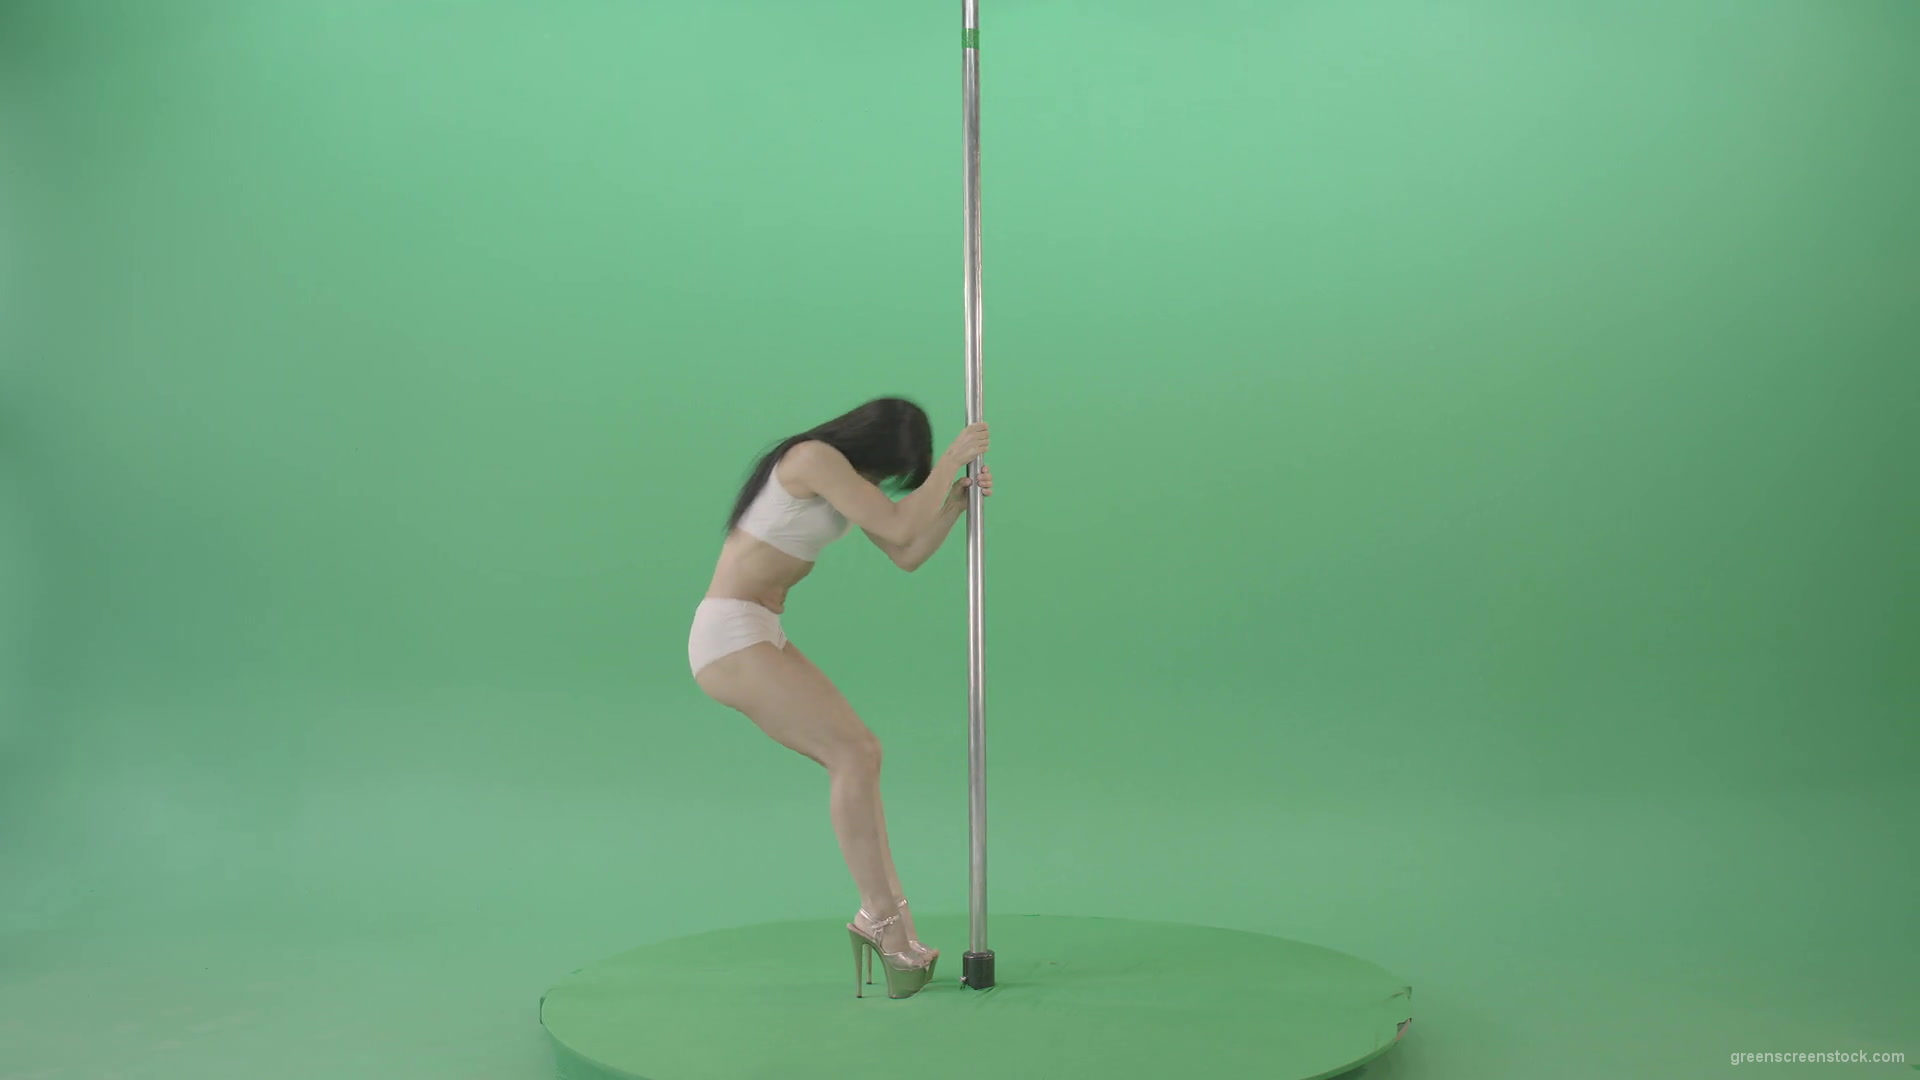 Pole-Dancing-Girl-waving-with-body-on-green-screen-4K-Video-Footage-1920_004 Green Screen Stock